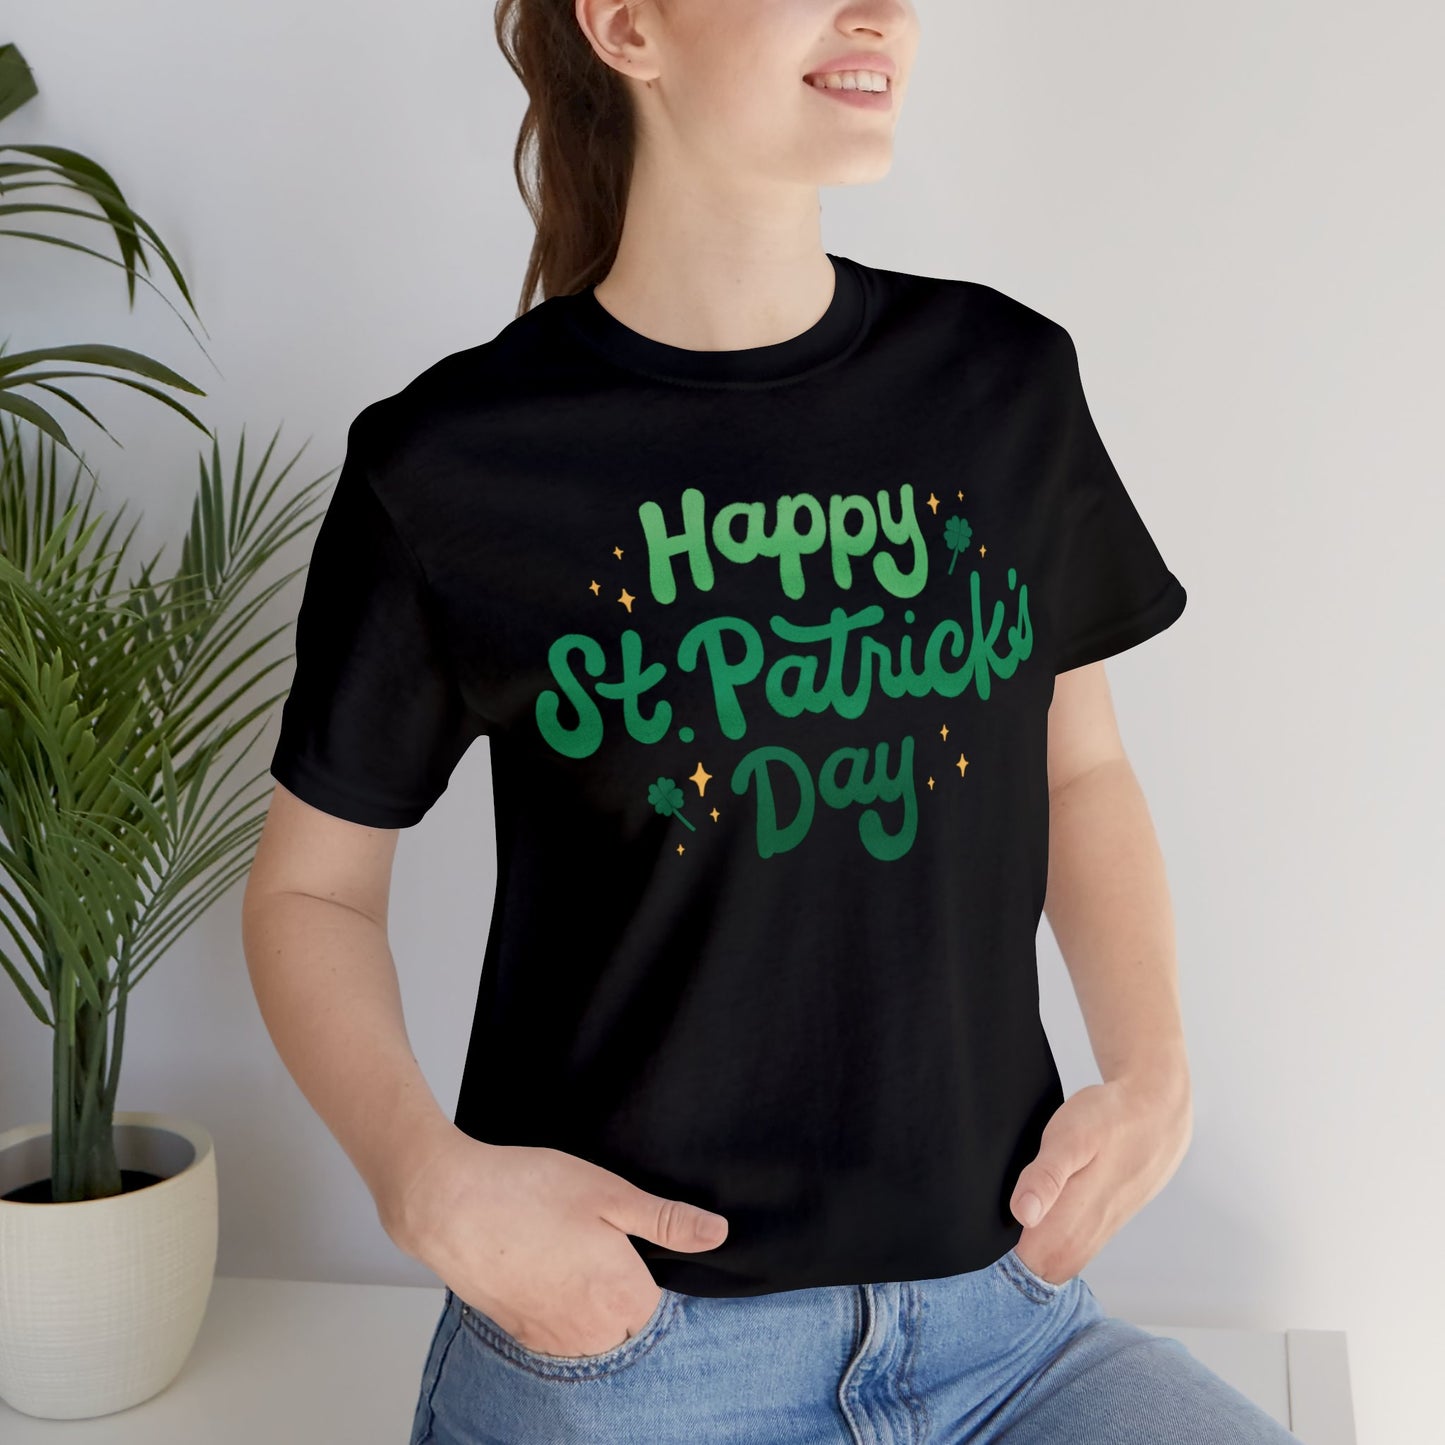 Happy St. Patrick’s Day - Unisex Jersey Short Sleeve Tee